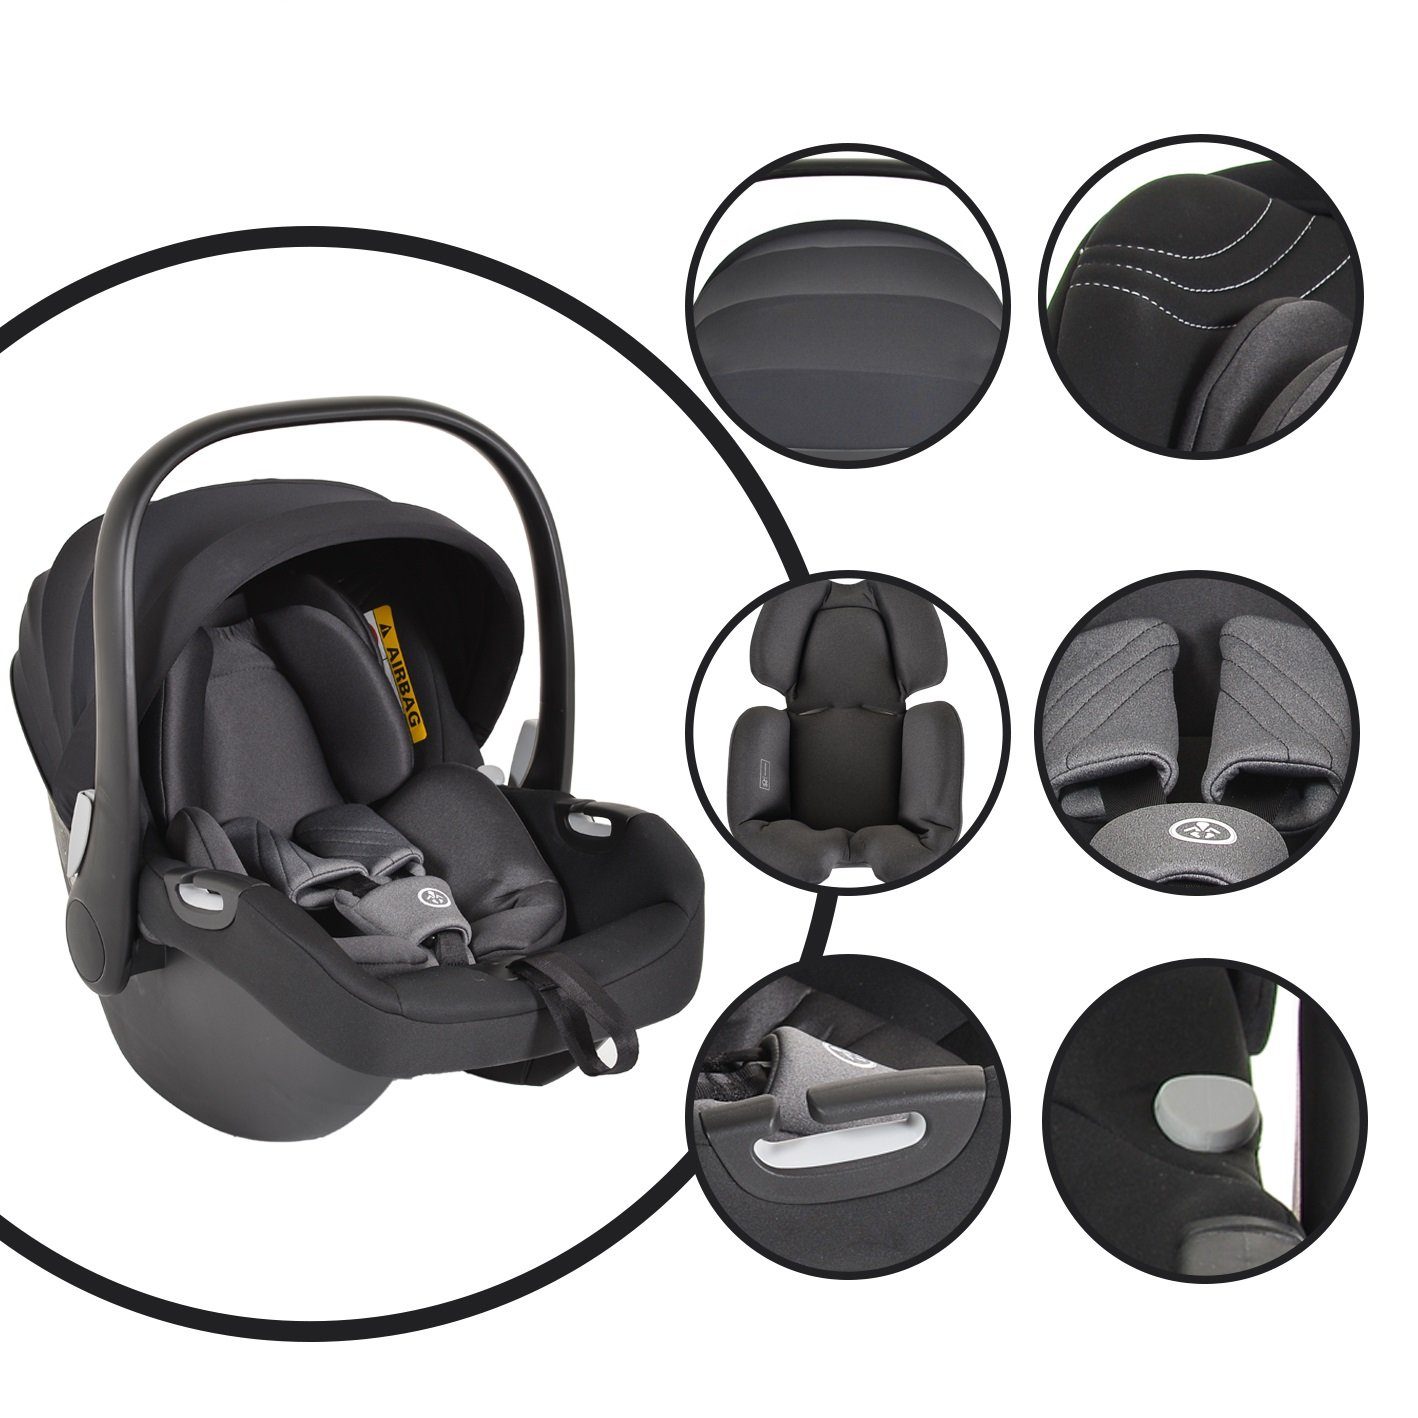 Cangaroo verstellbarer Babyspiegel fürs Auto, Kinder Rücksitzspiegel